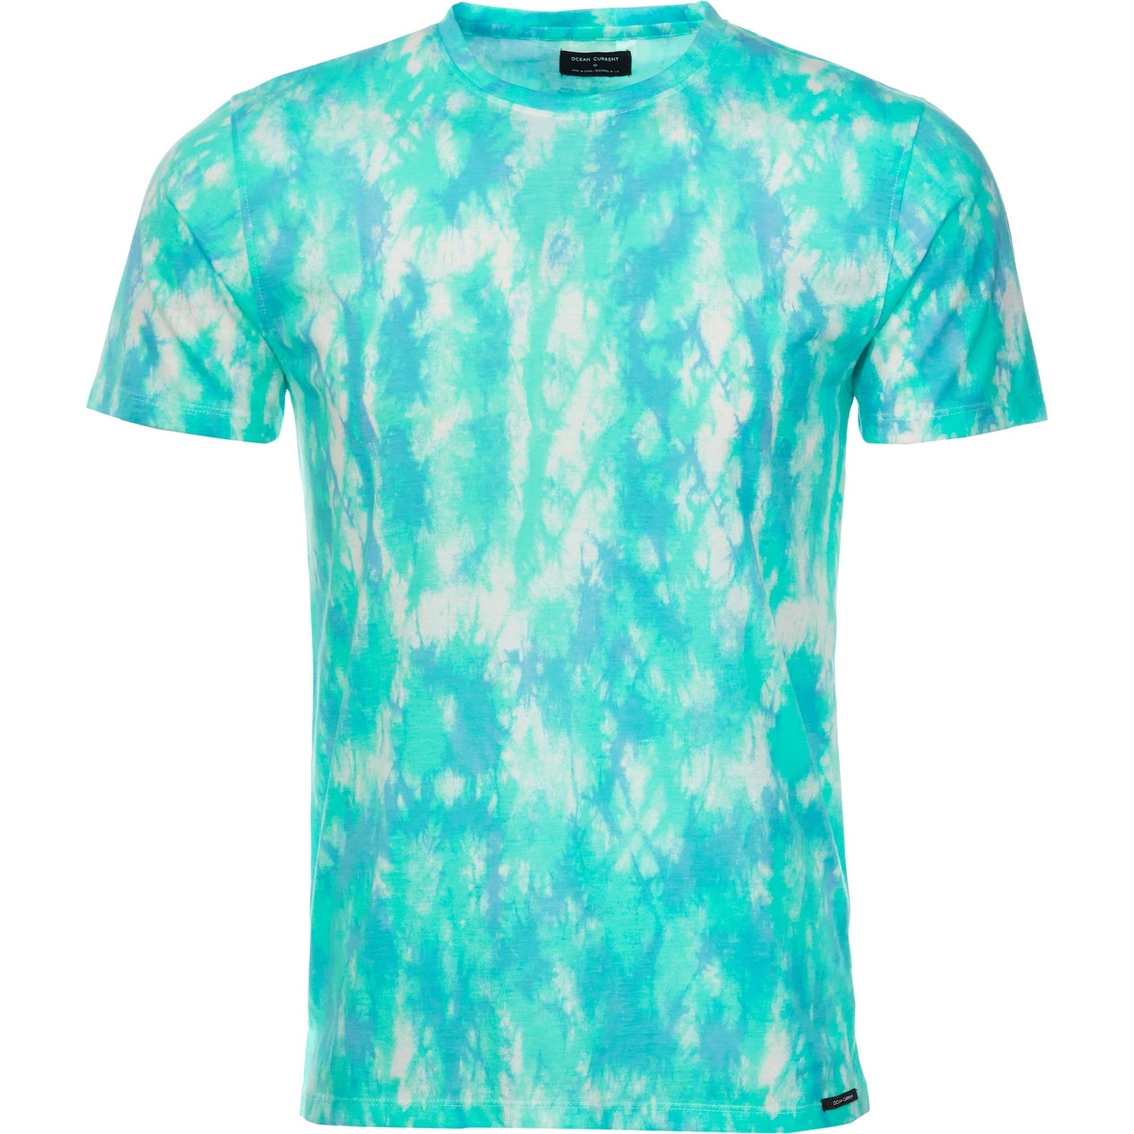 Ocean Current Tie Dye Vibez Tee Shirt | T-shirts | Clothing ...